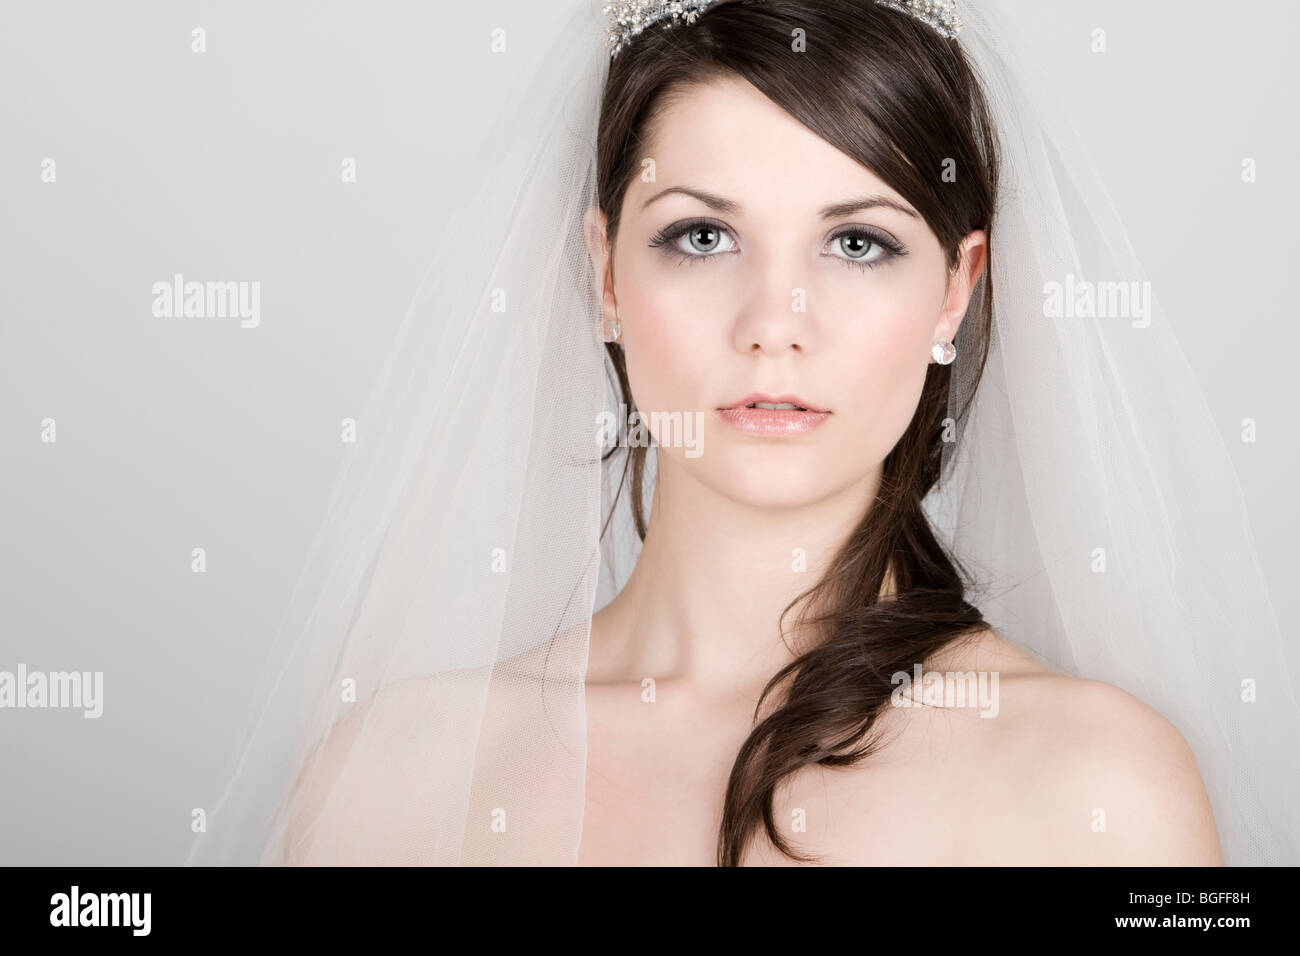 Striking Portrait Shot of a Beautiful Teenage Bride Stock Photo